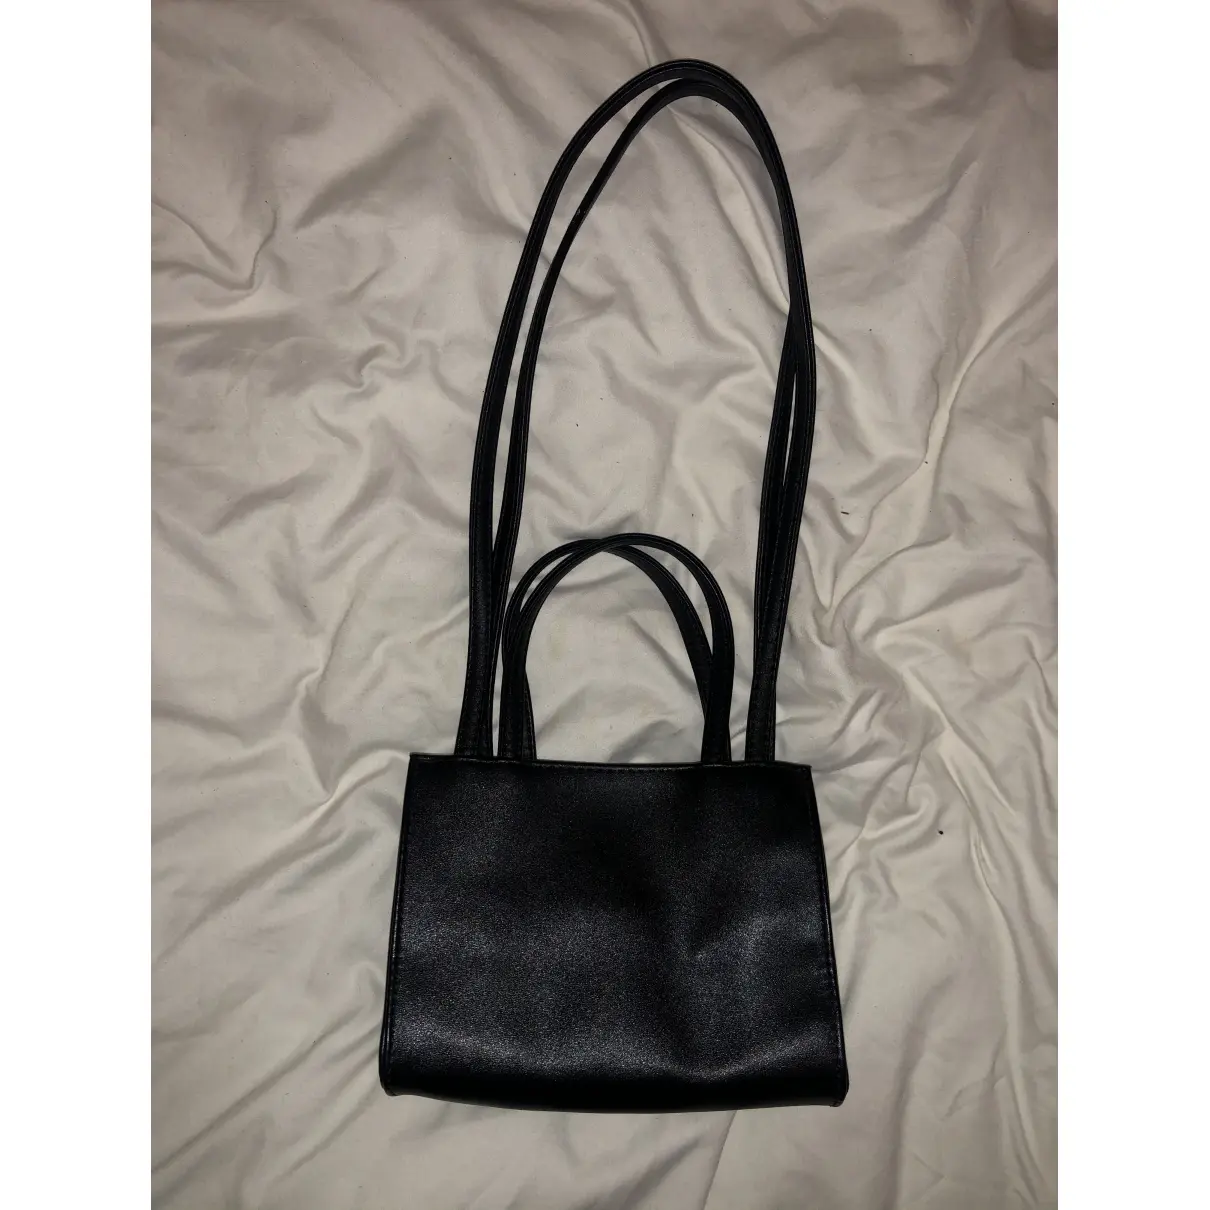 Buy Telfar Leather bag online